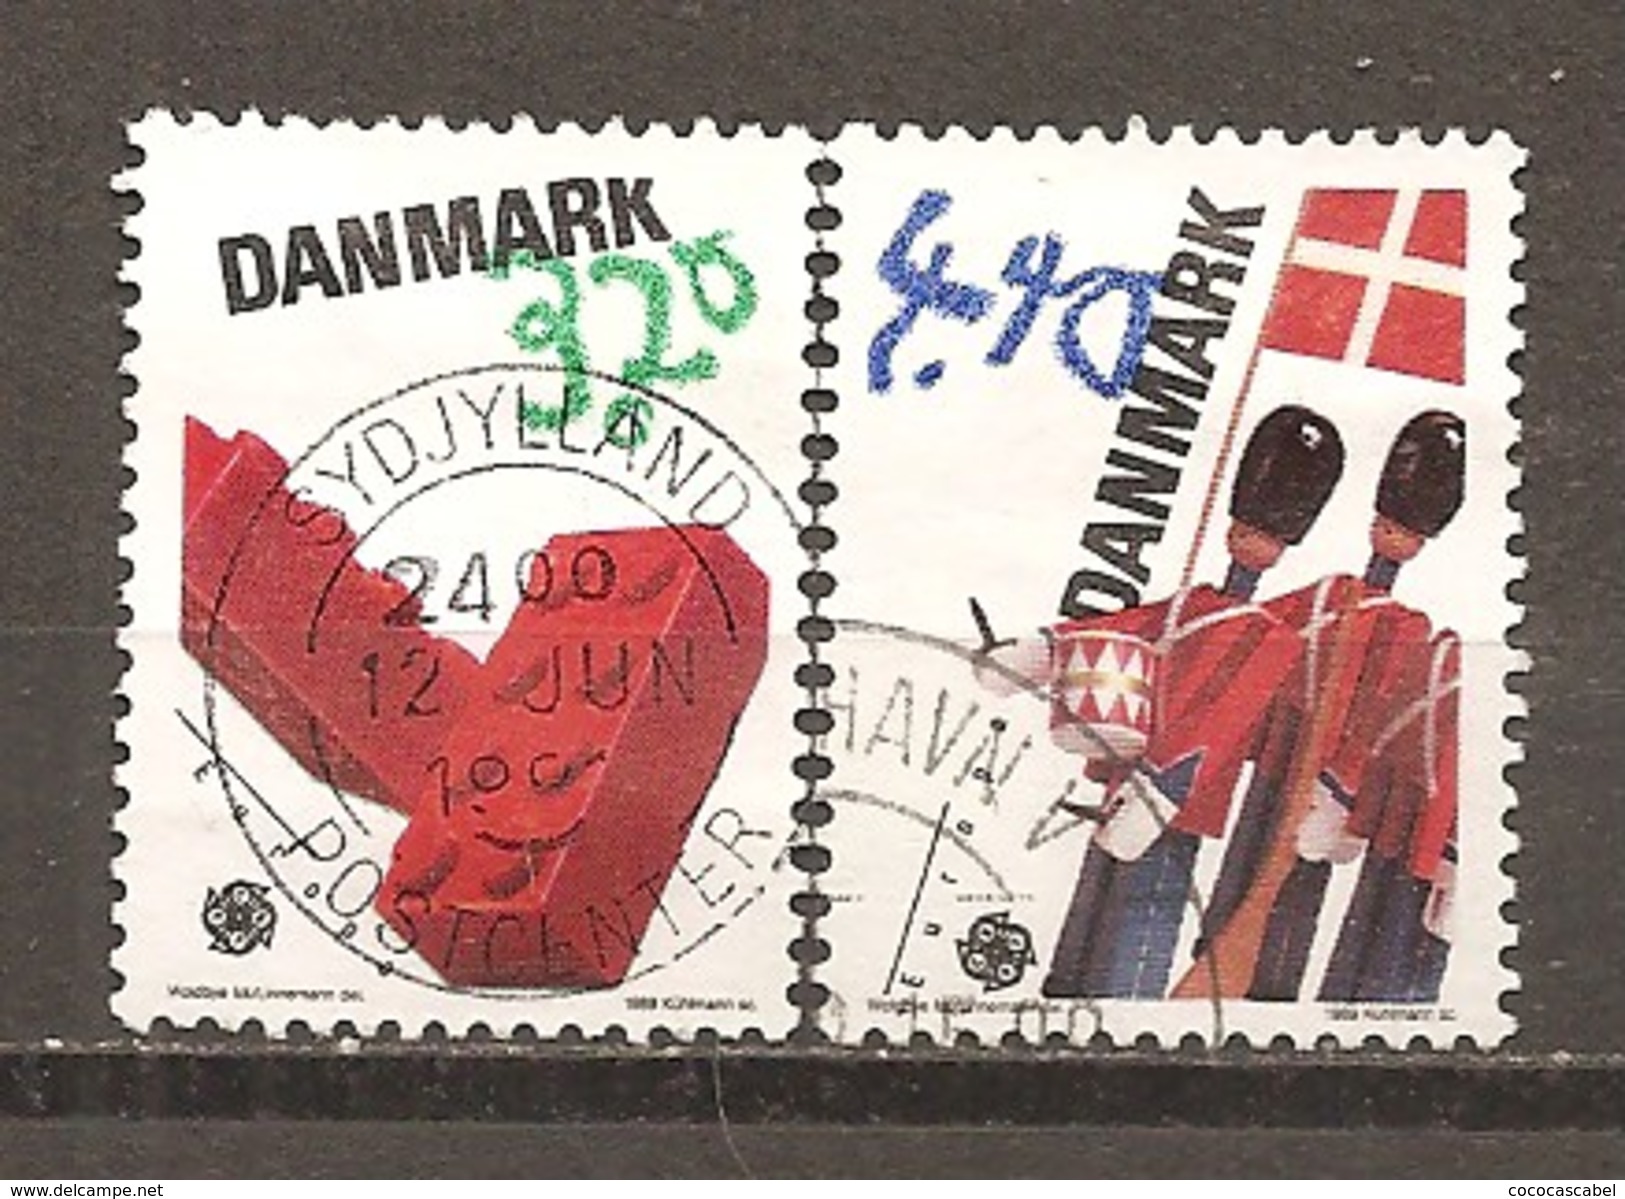 Dinamarca-Denmark Yvert Nº 953-54 (usado) (o) - Usado